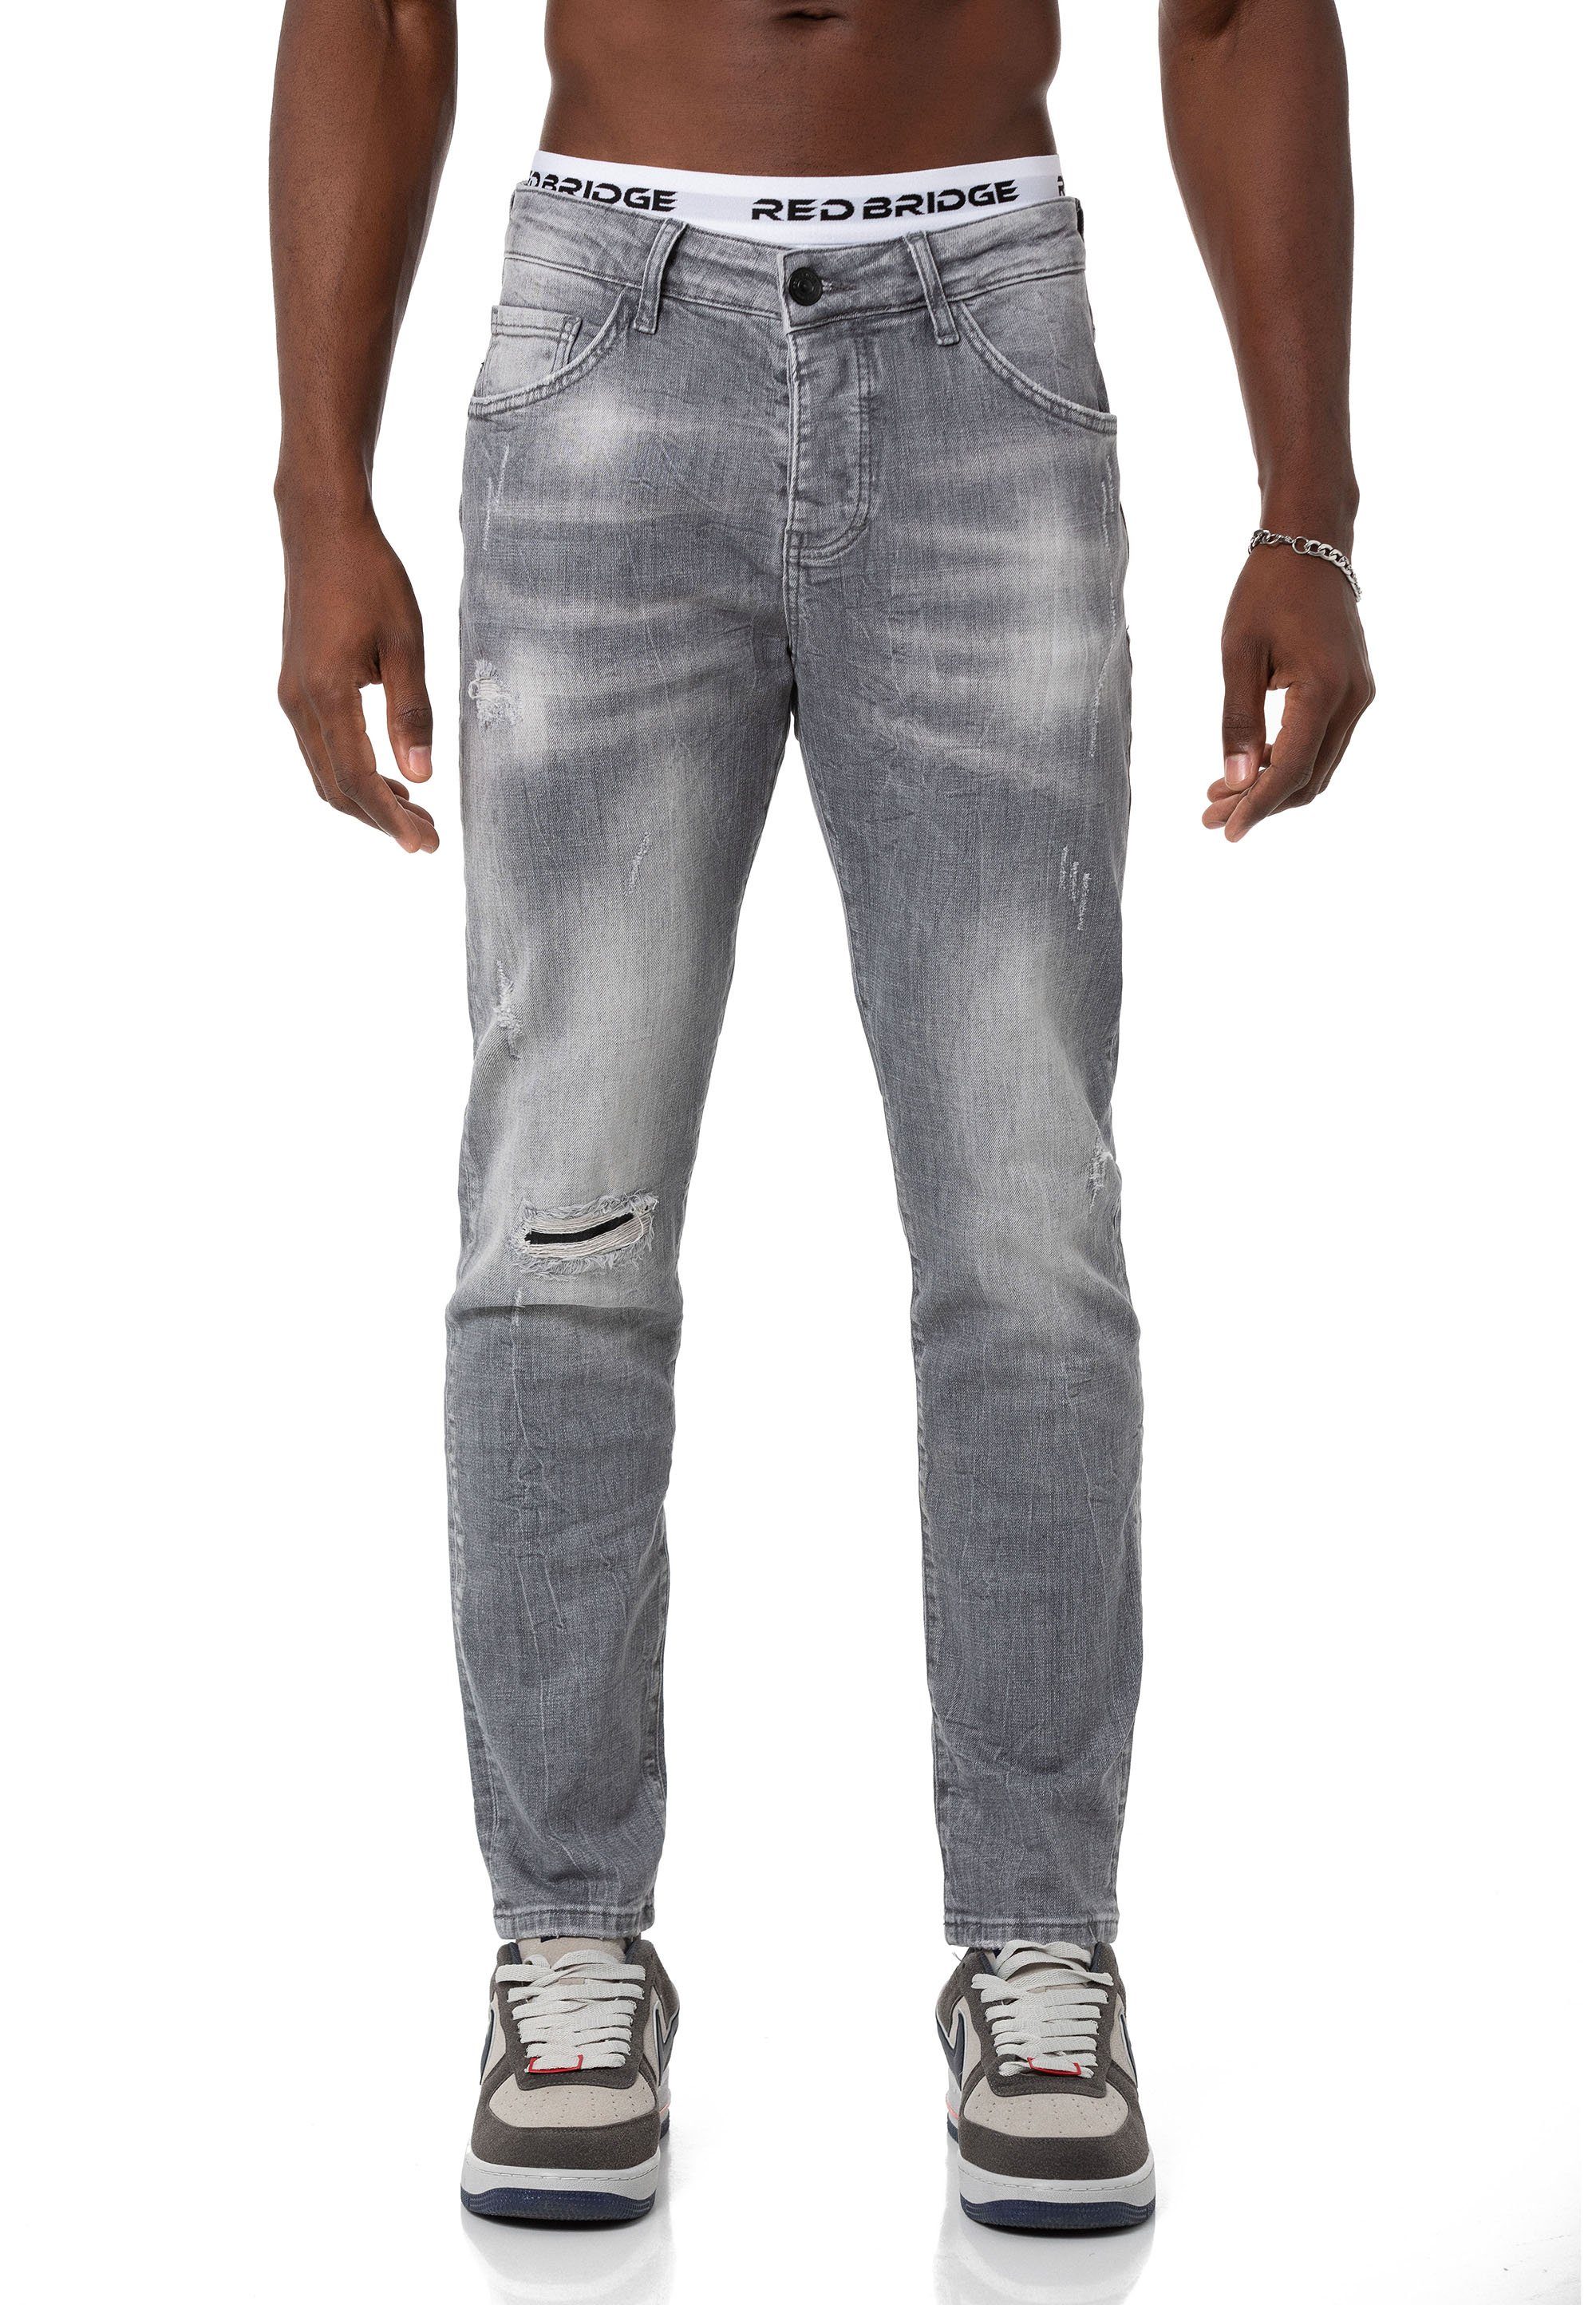 Pants Straight Distressed-Look Denim Hose Slim-fit-Jeans Grau Leg RedBridge